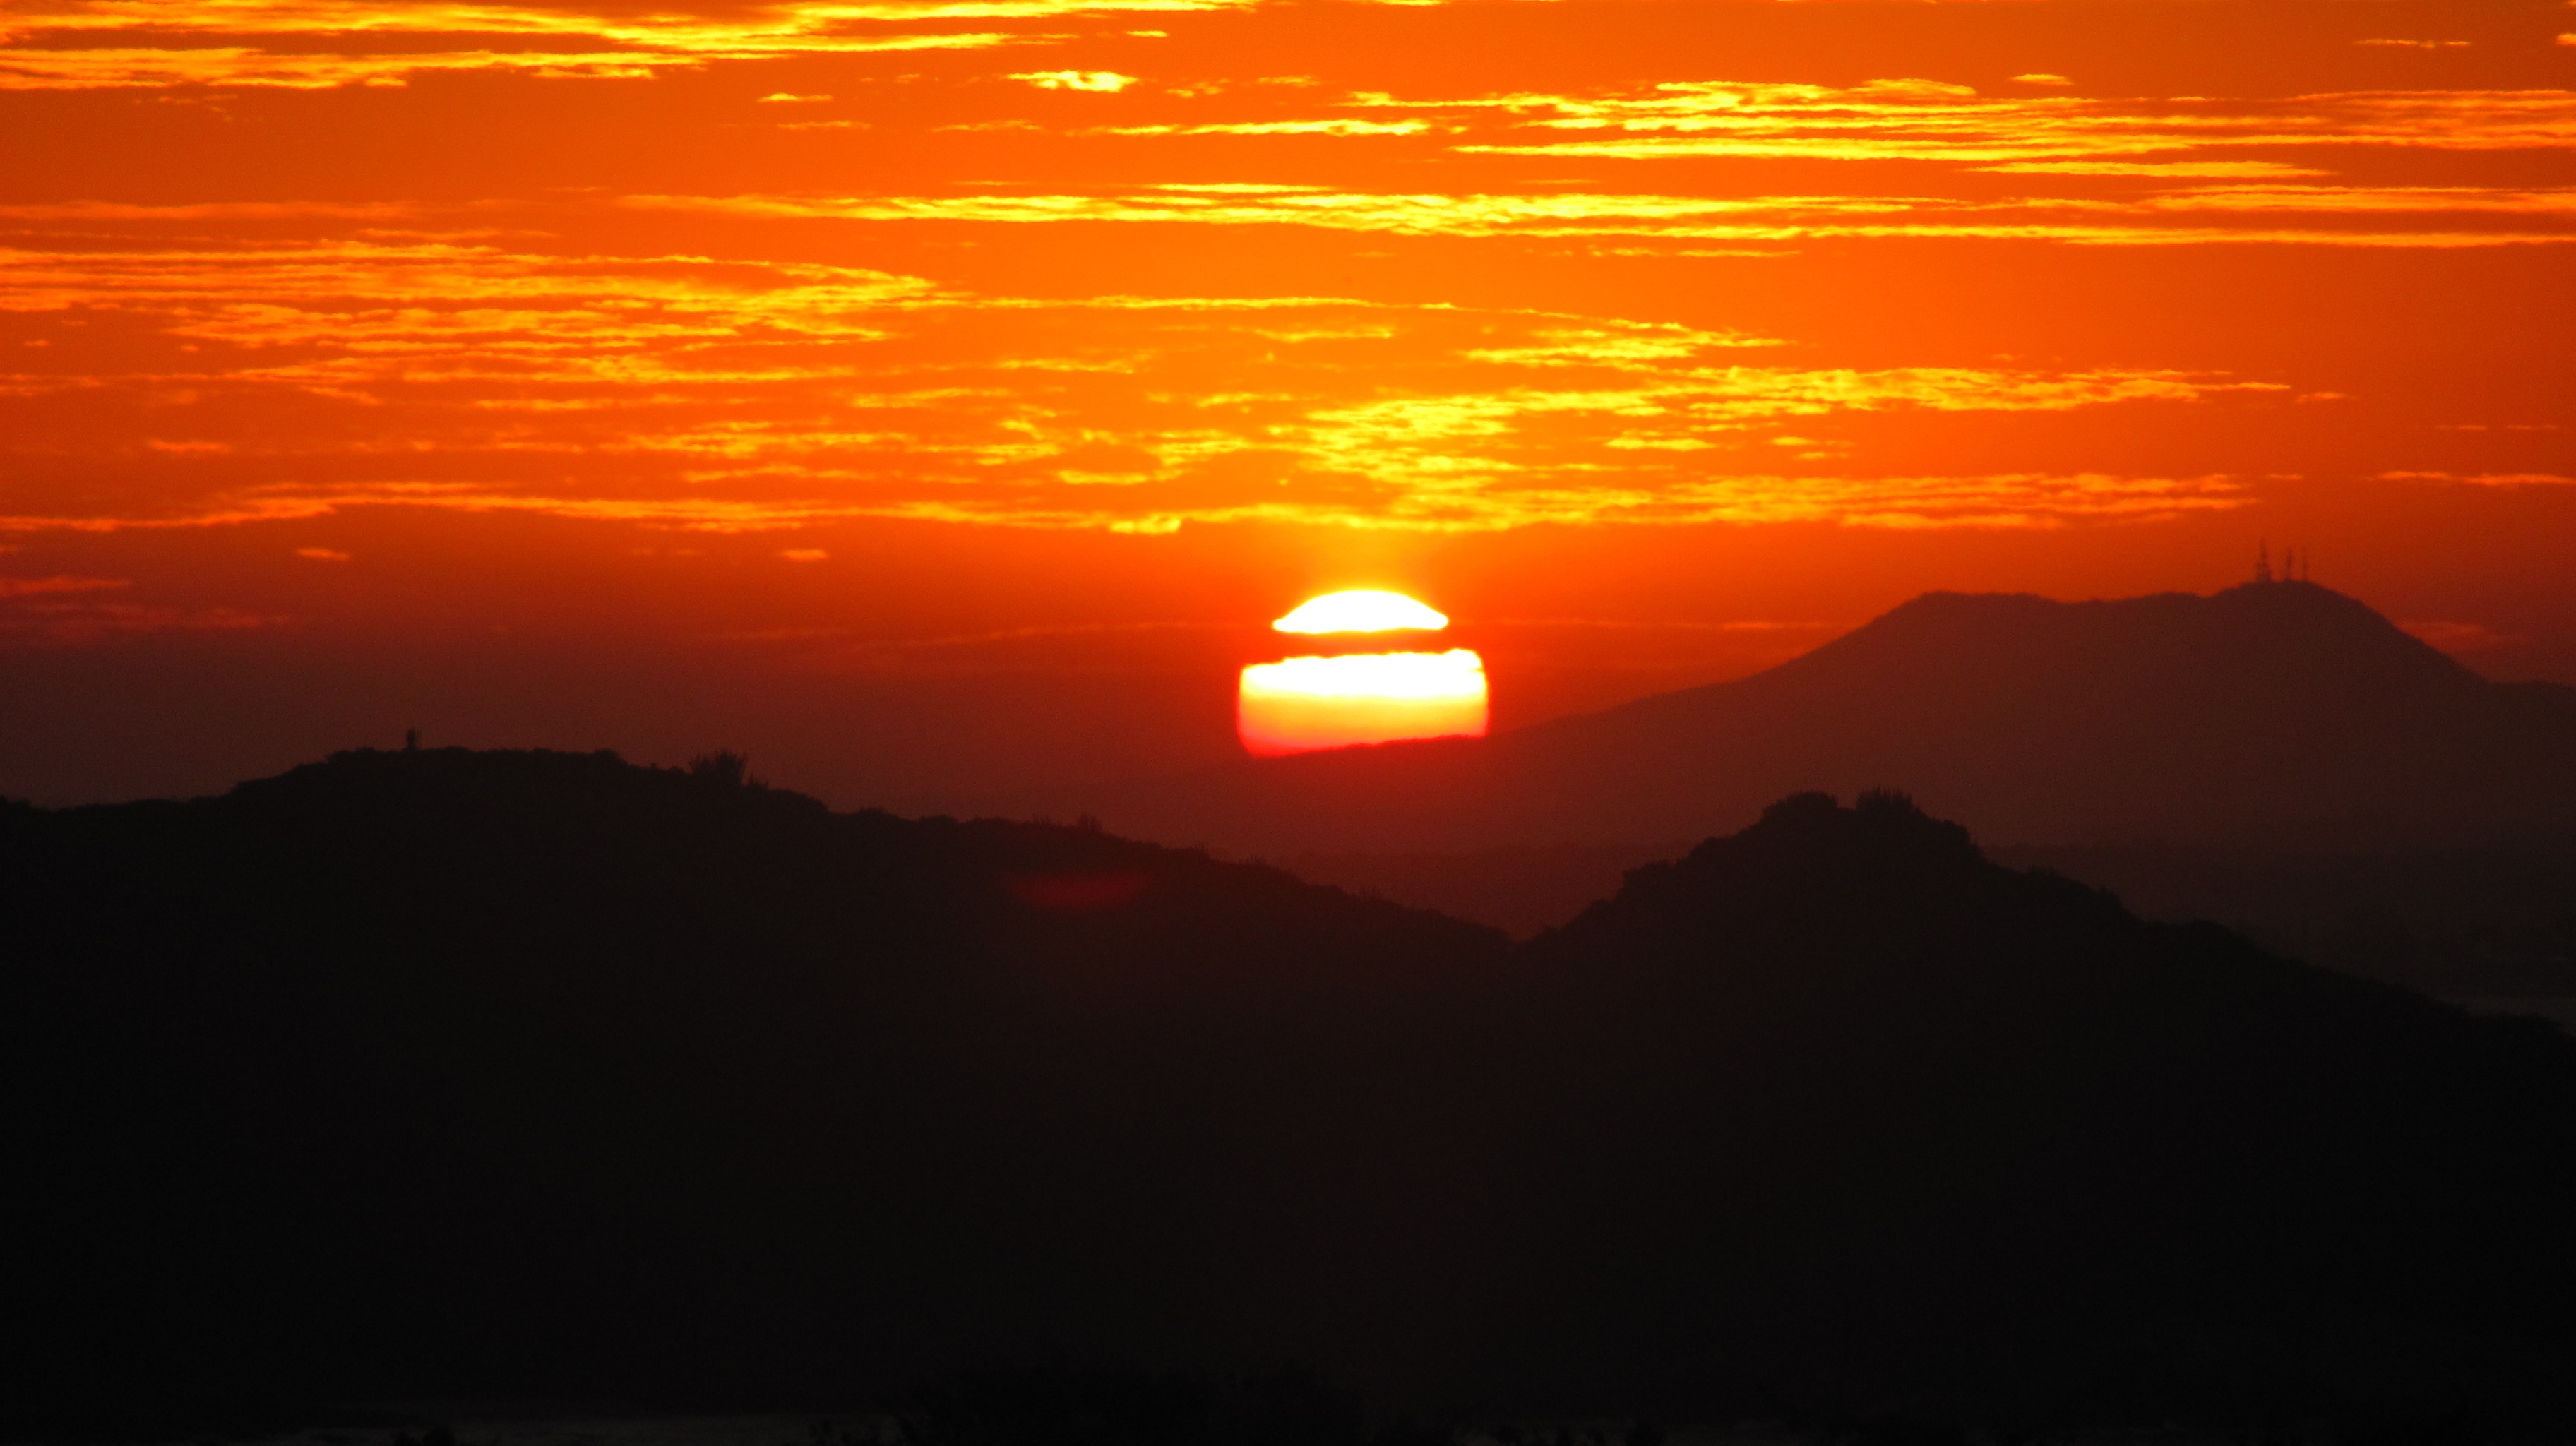 Orange sunset in the mountains free image